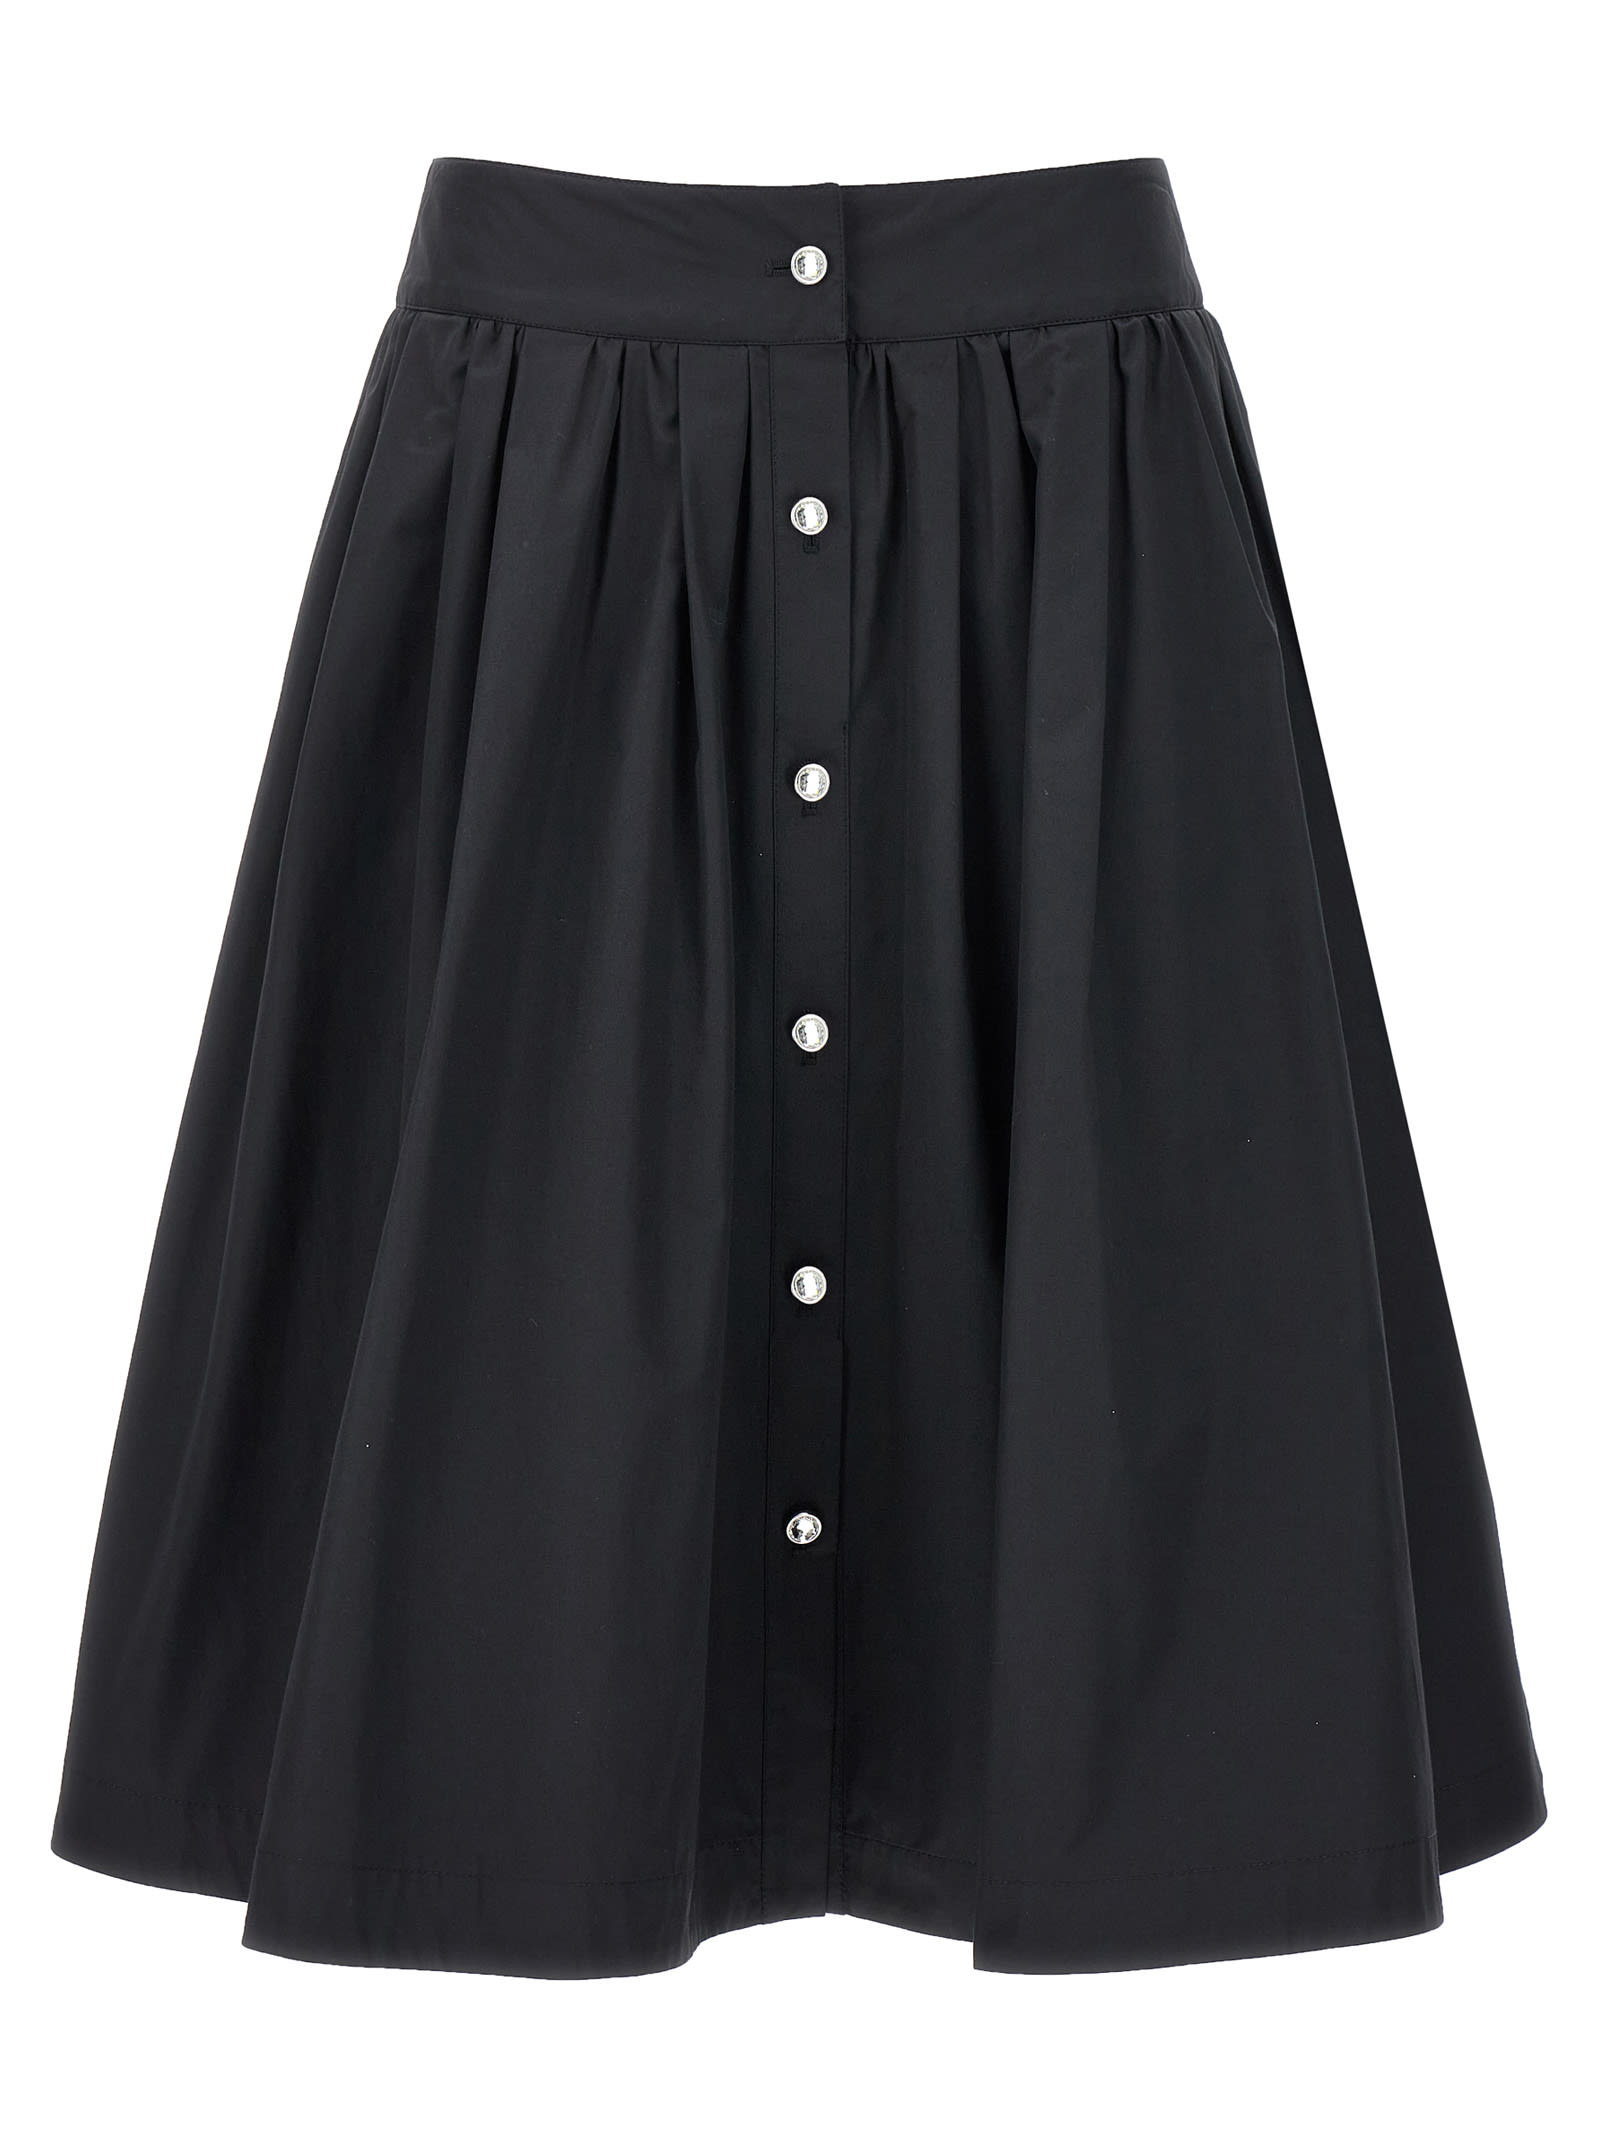 Jewel Button Nylon Blend Skirt